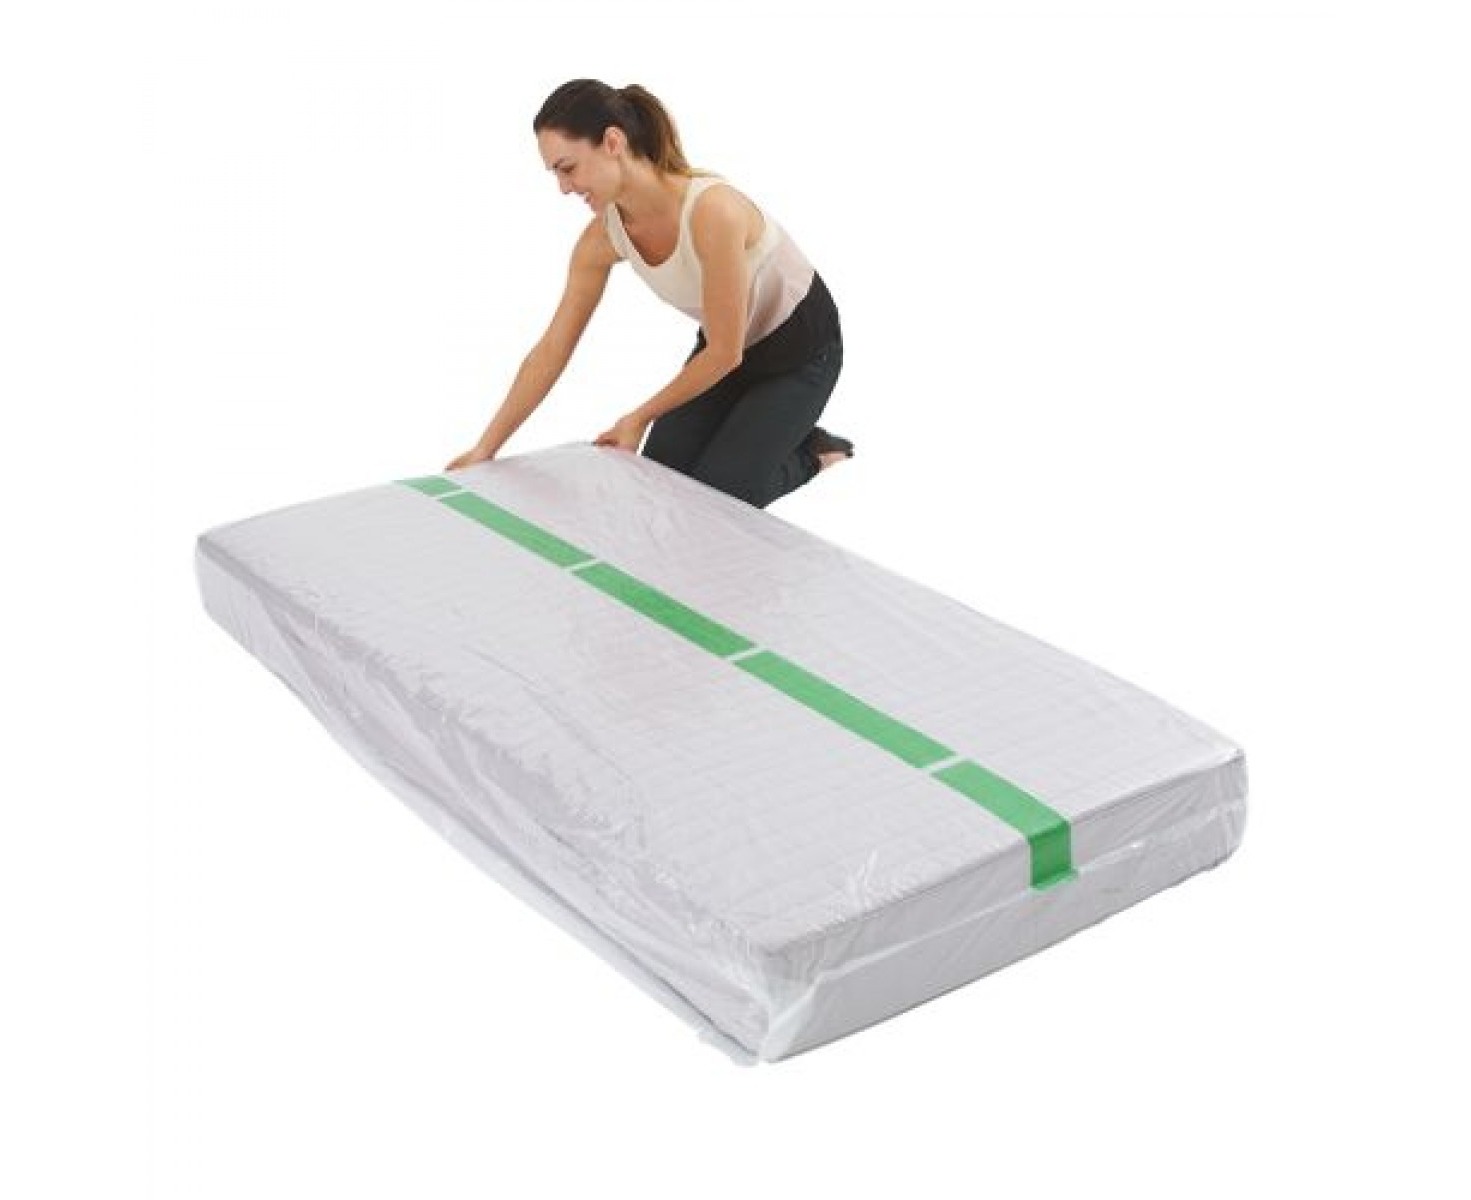 plastic bag cover for mattress